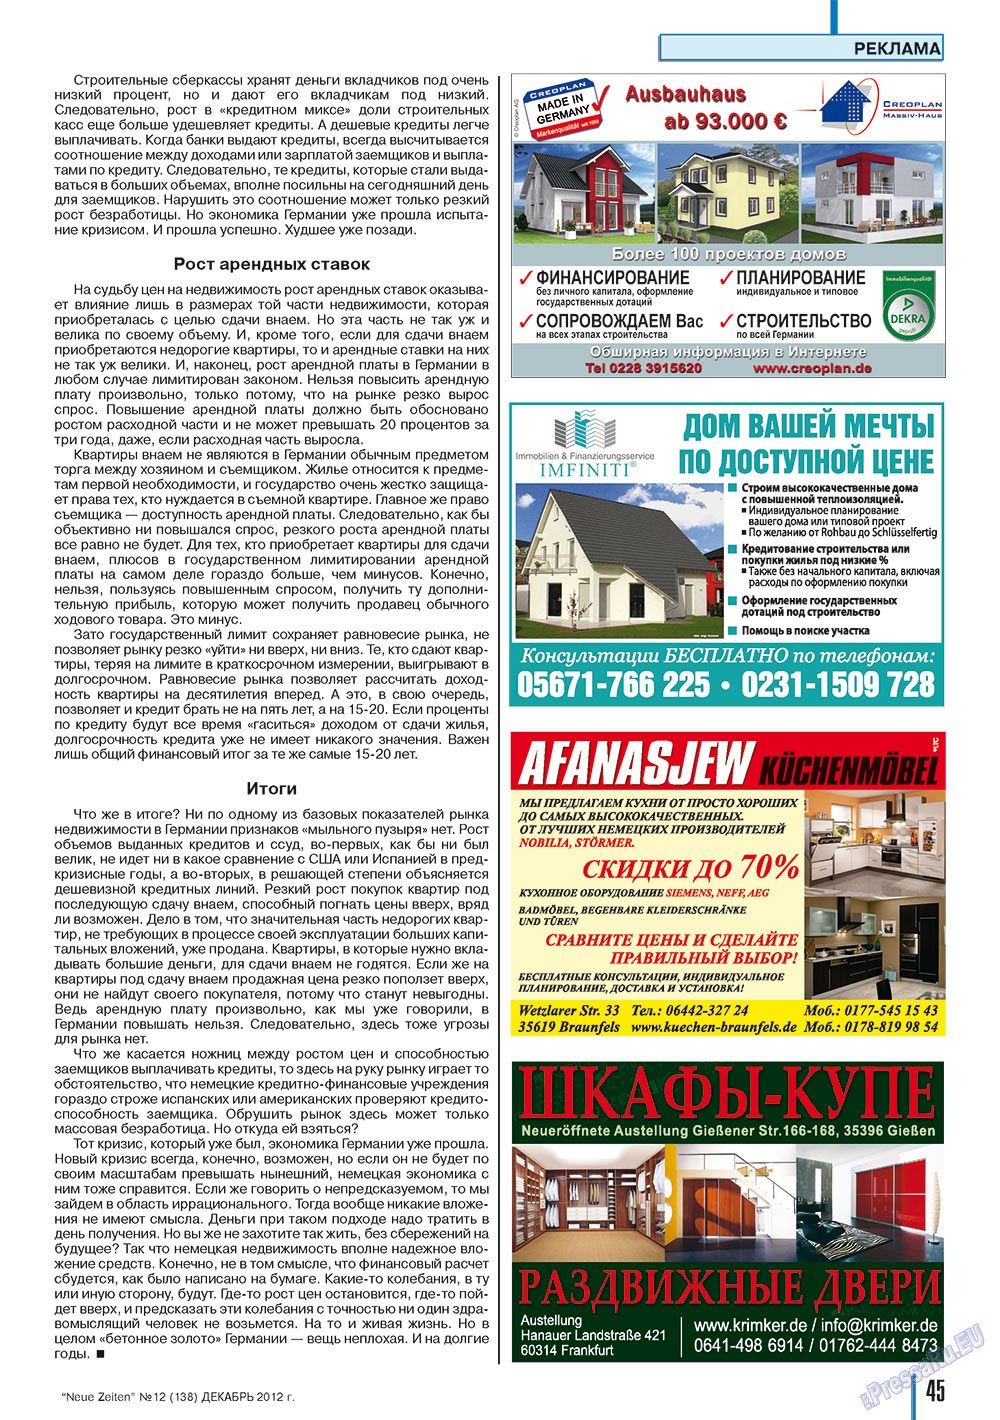 Neue Zeiten (журнал). 2012 год, номер 12, стр. 45